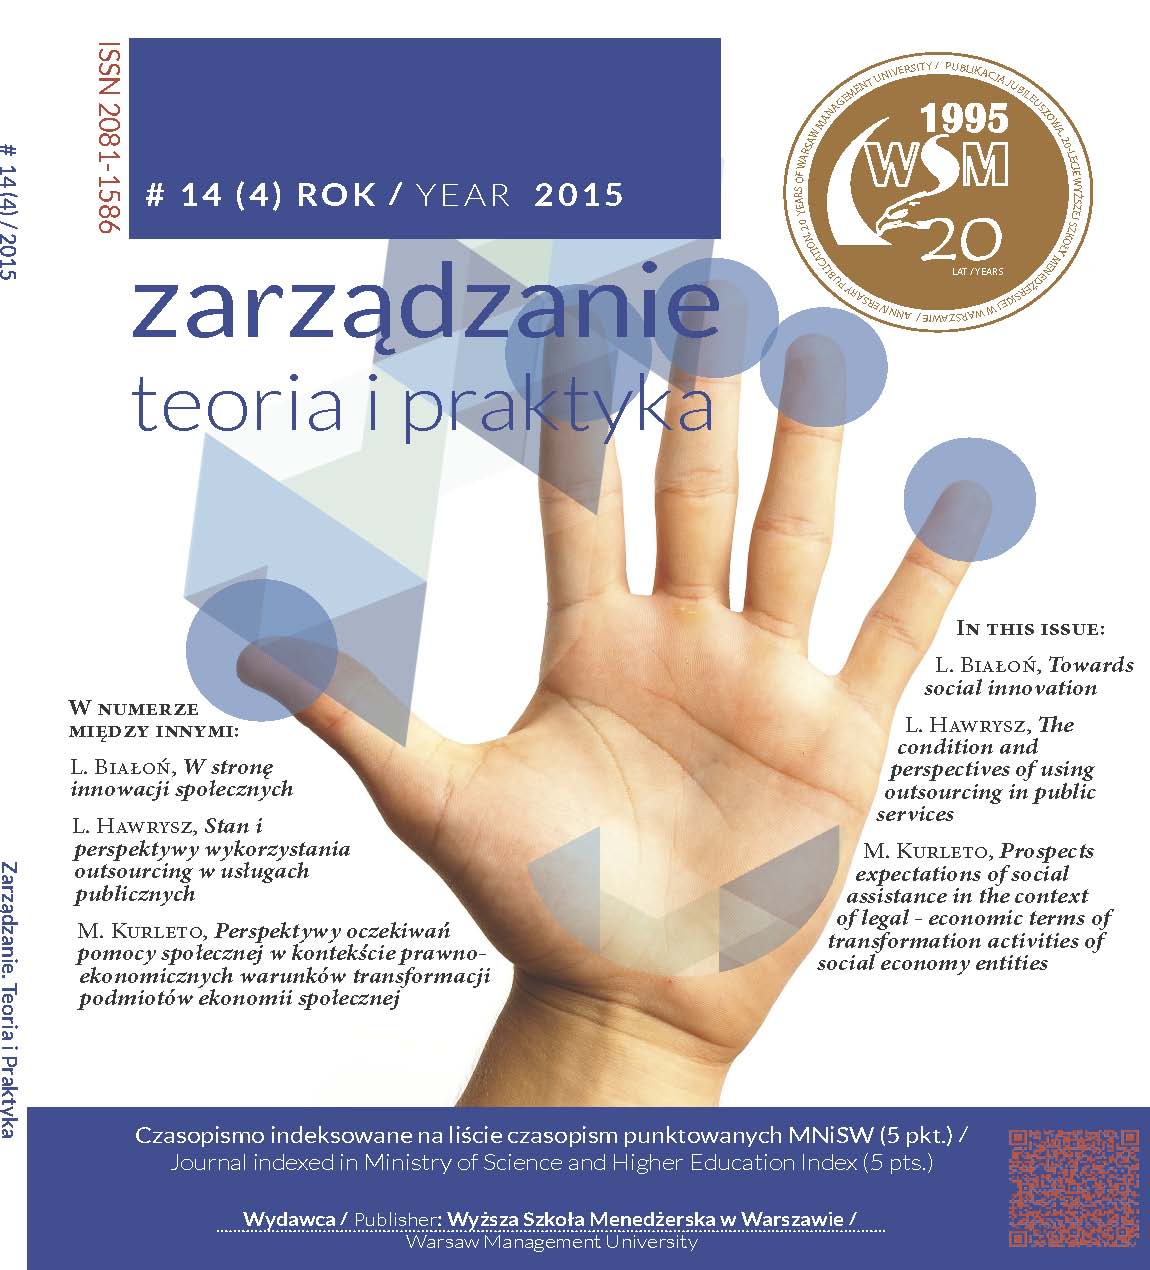 CSR practice in Poland – employee dimension